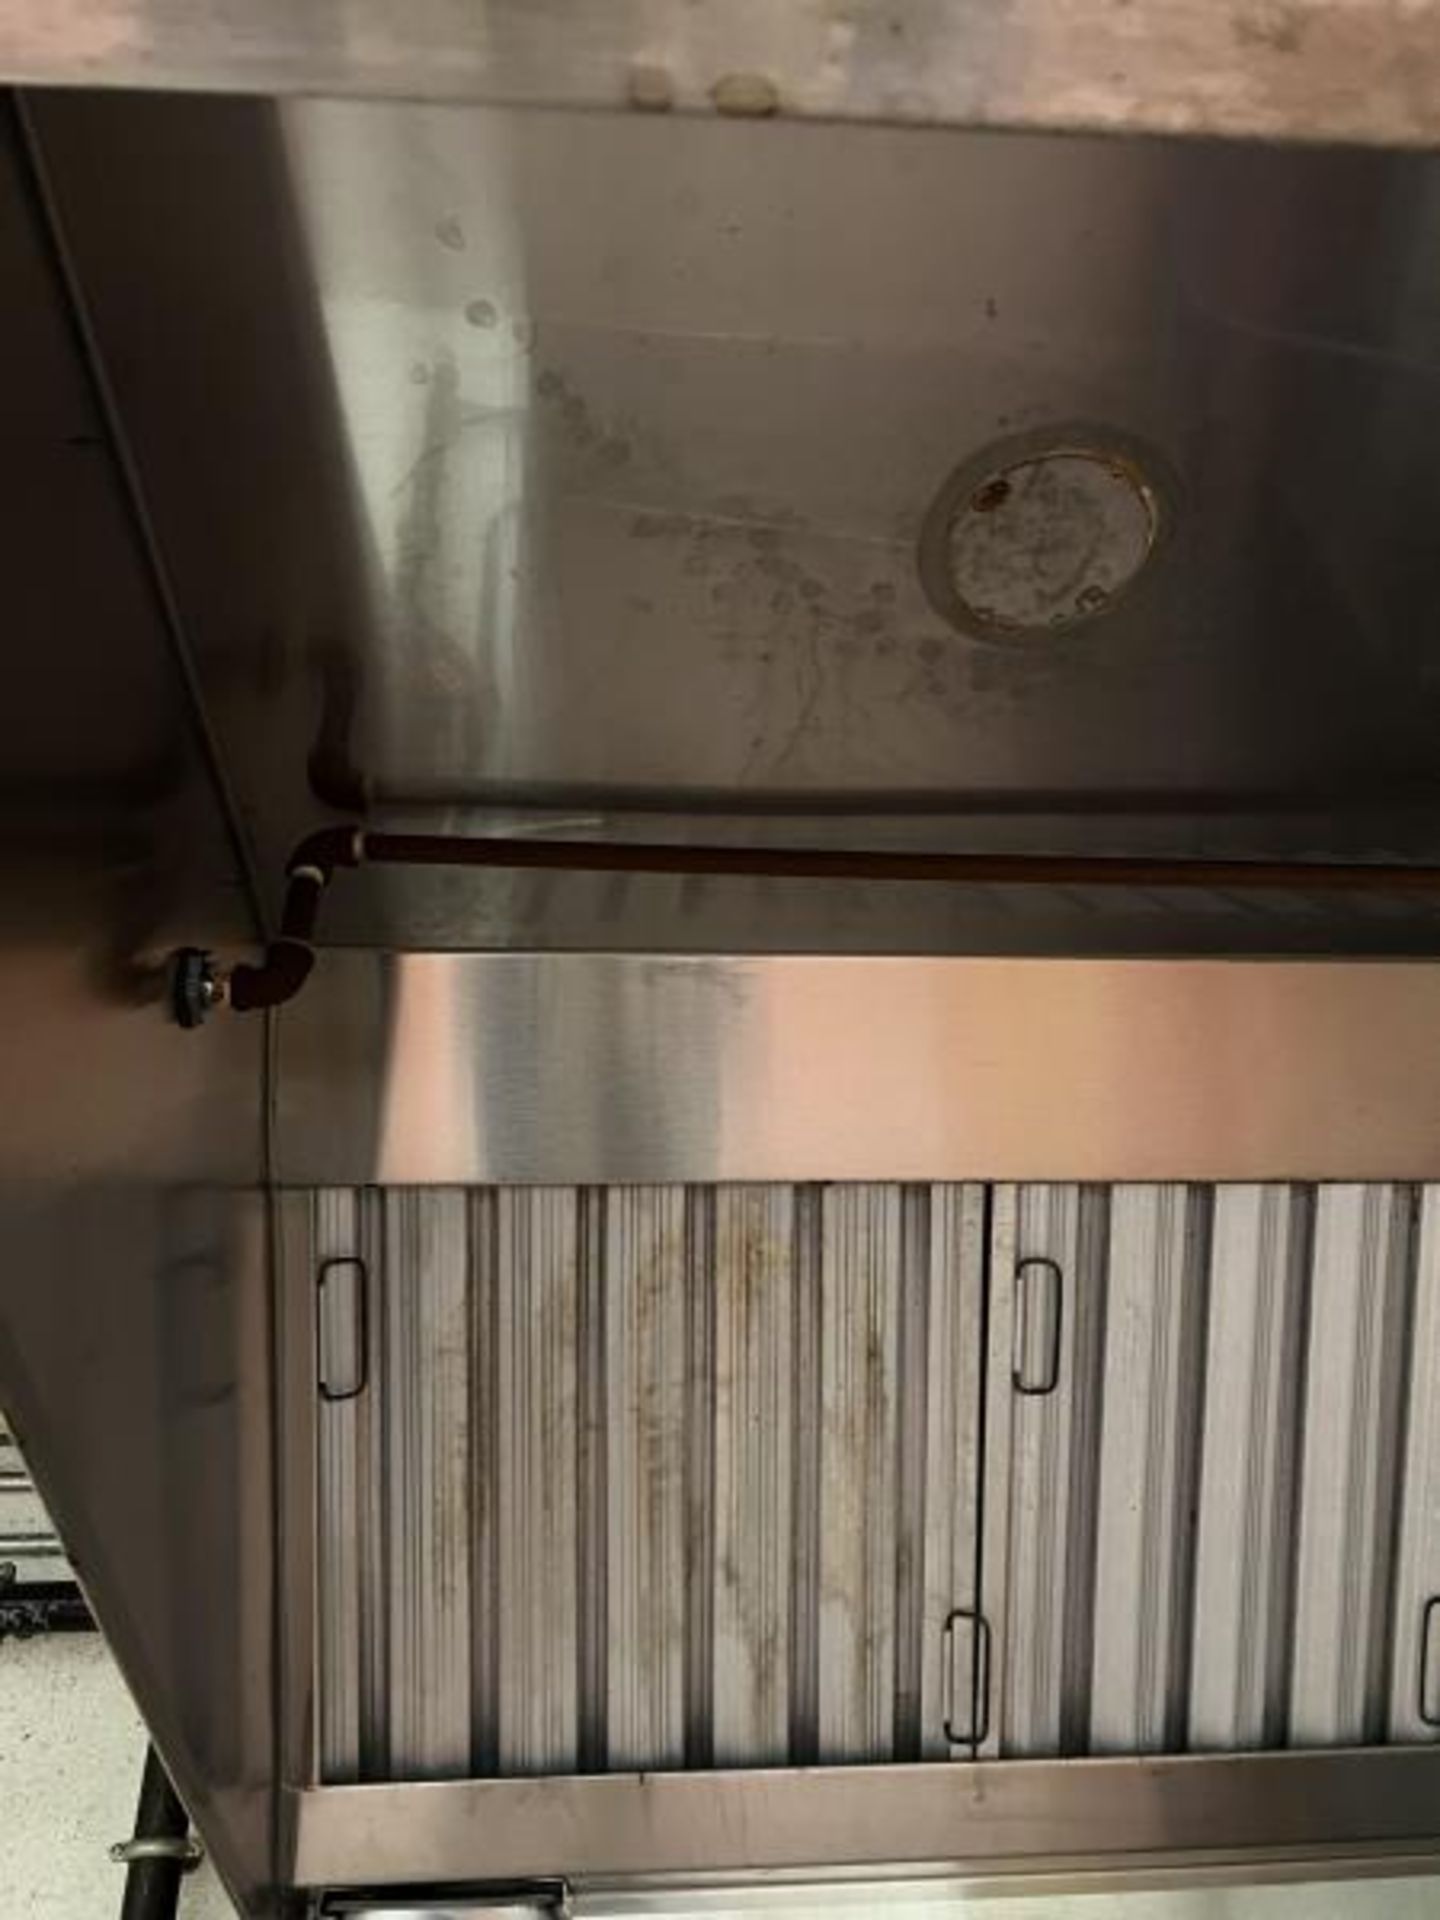 Exhaust Hood 12' Long in Basement Kitchen - Image 2 of 5